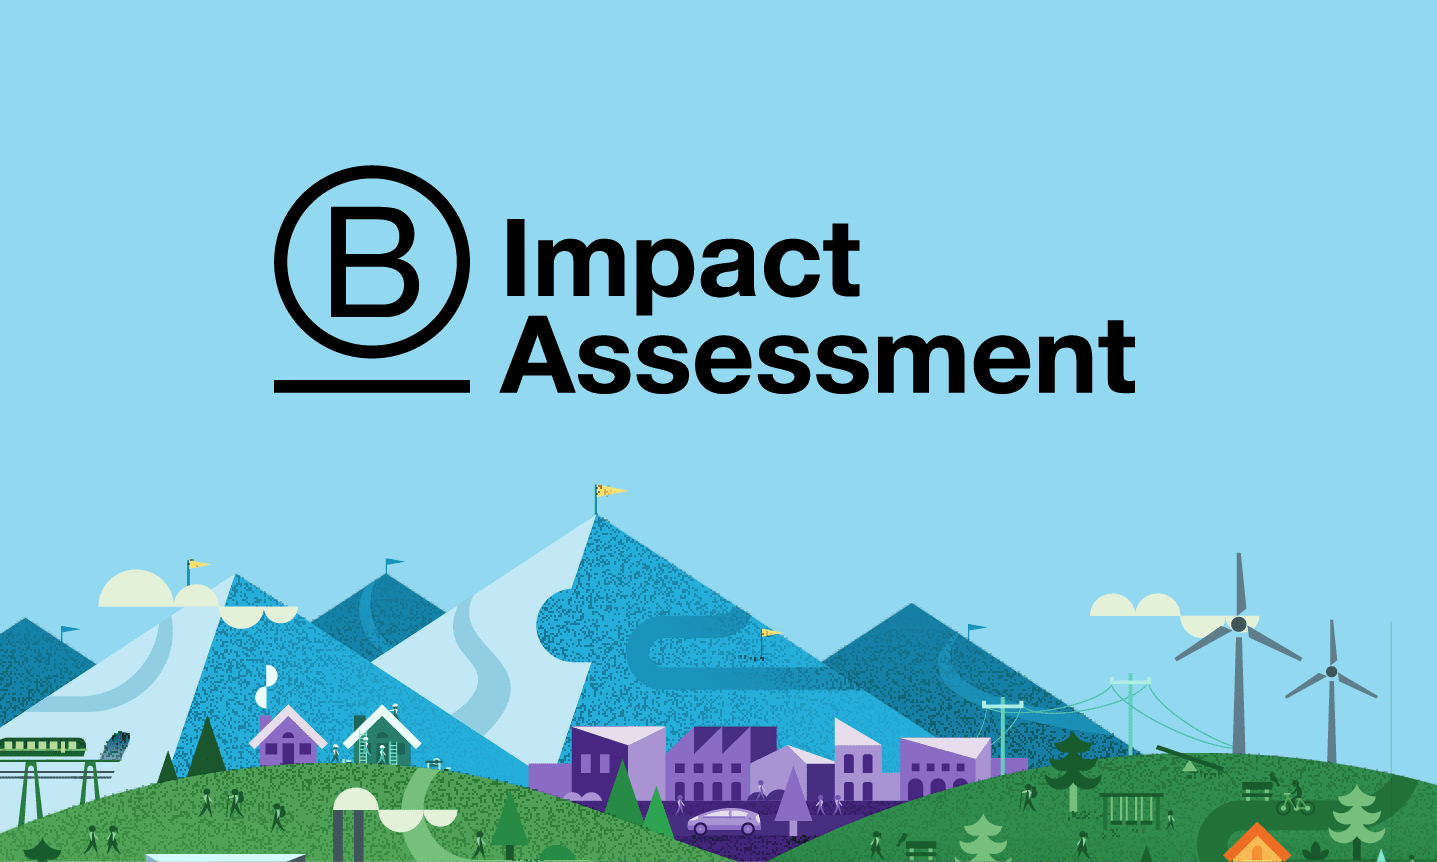 B Impact Assessment